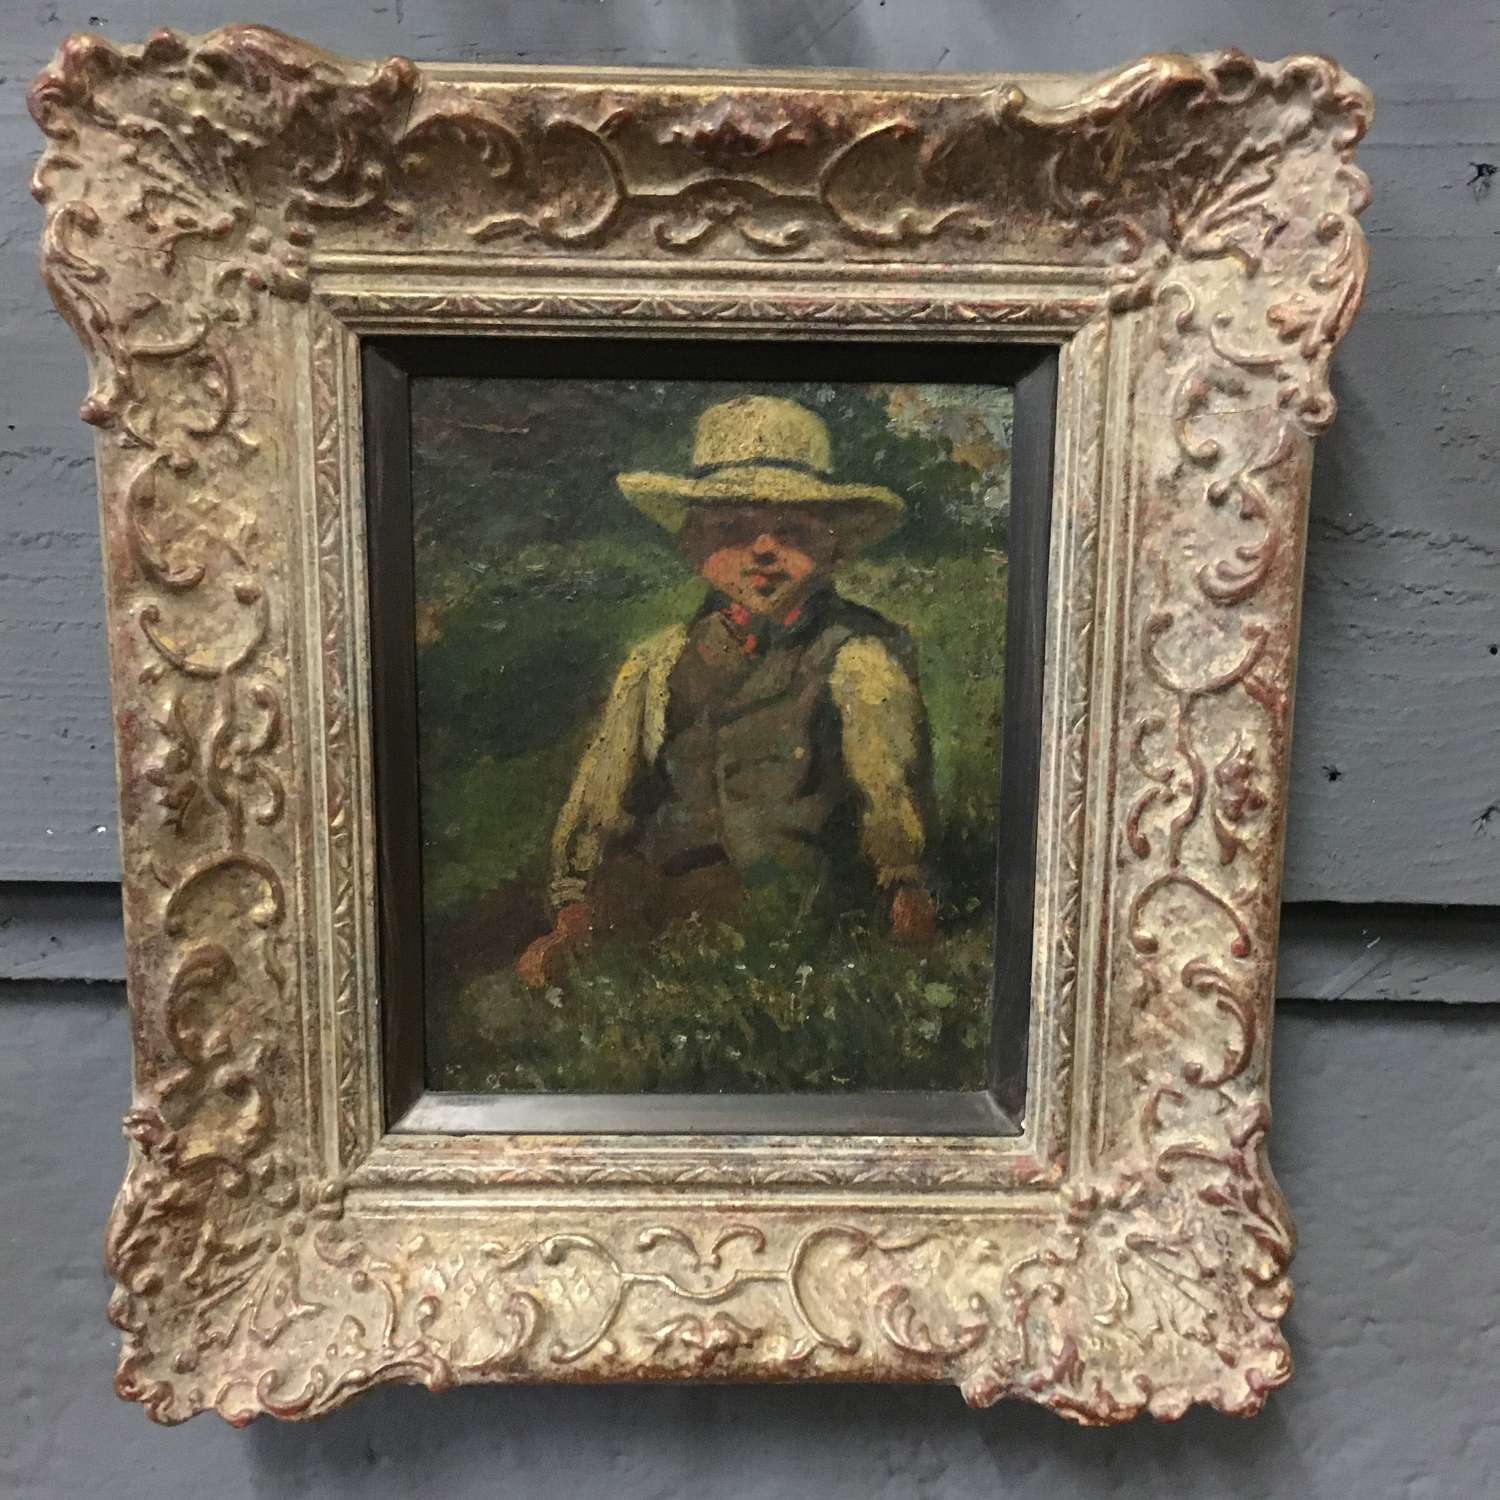 Oil on panel portrait of an Edwardian Boy wearing a sunhat